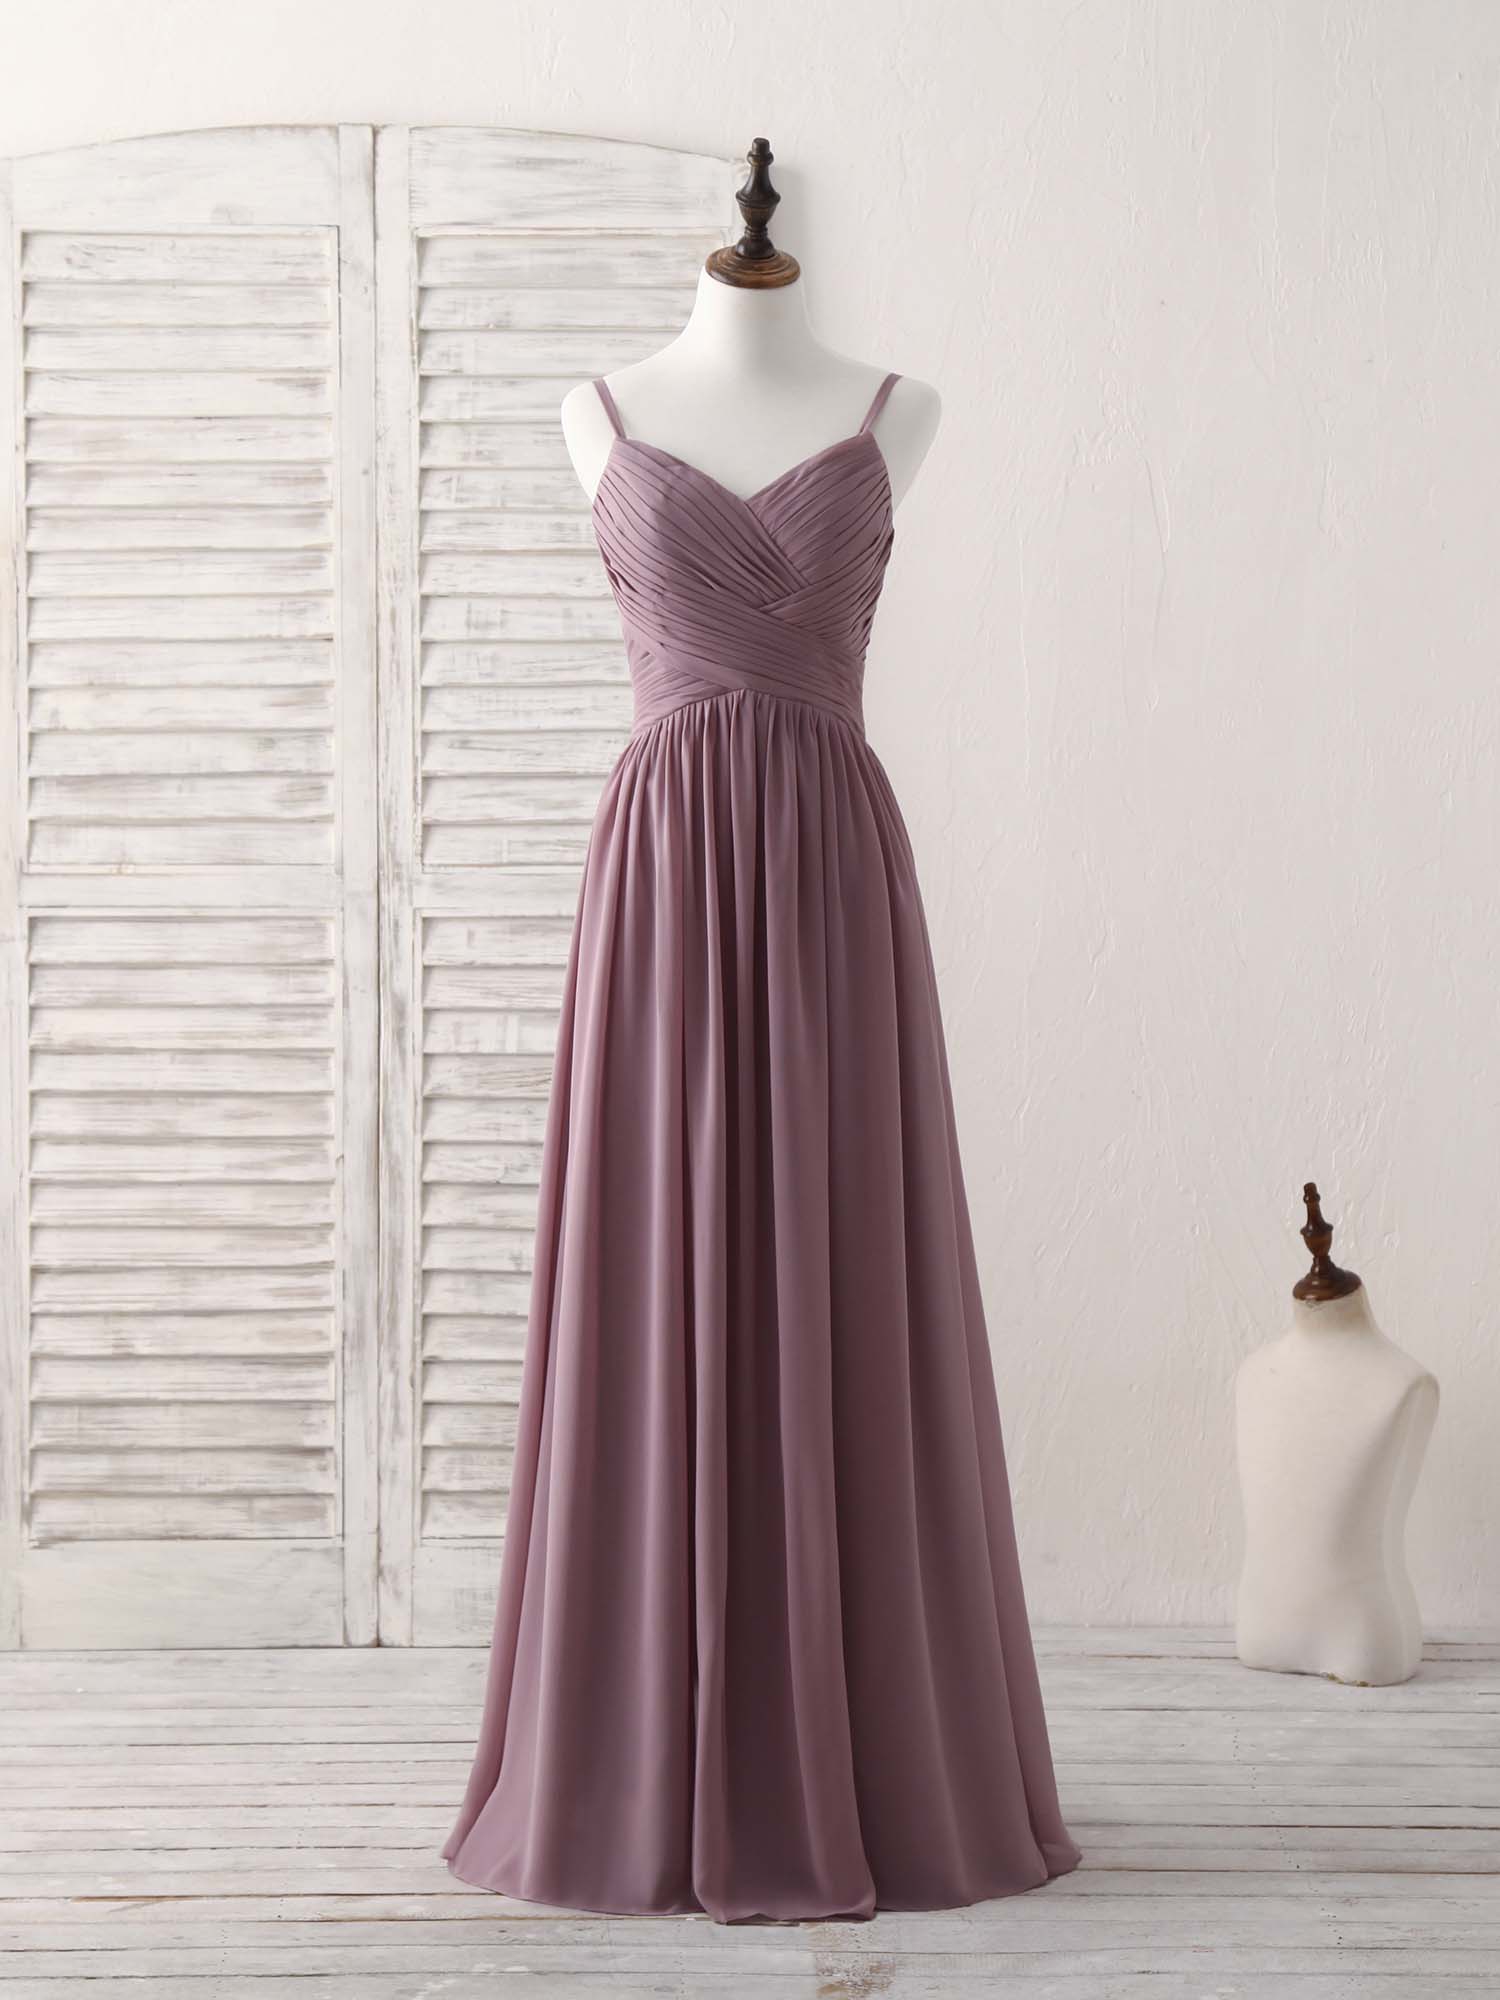 Simple V Neck Chiffon Long Corset Prom Dress Dark Pink Corset Bridesmaid Dress outfit, Party Dresses Glitter